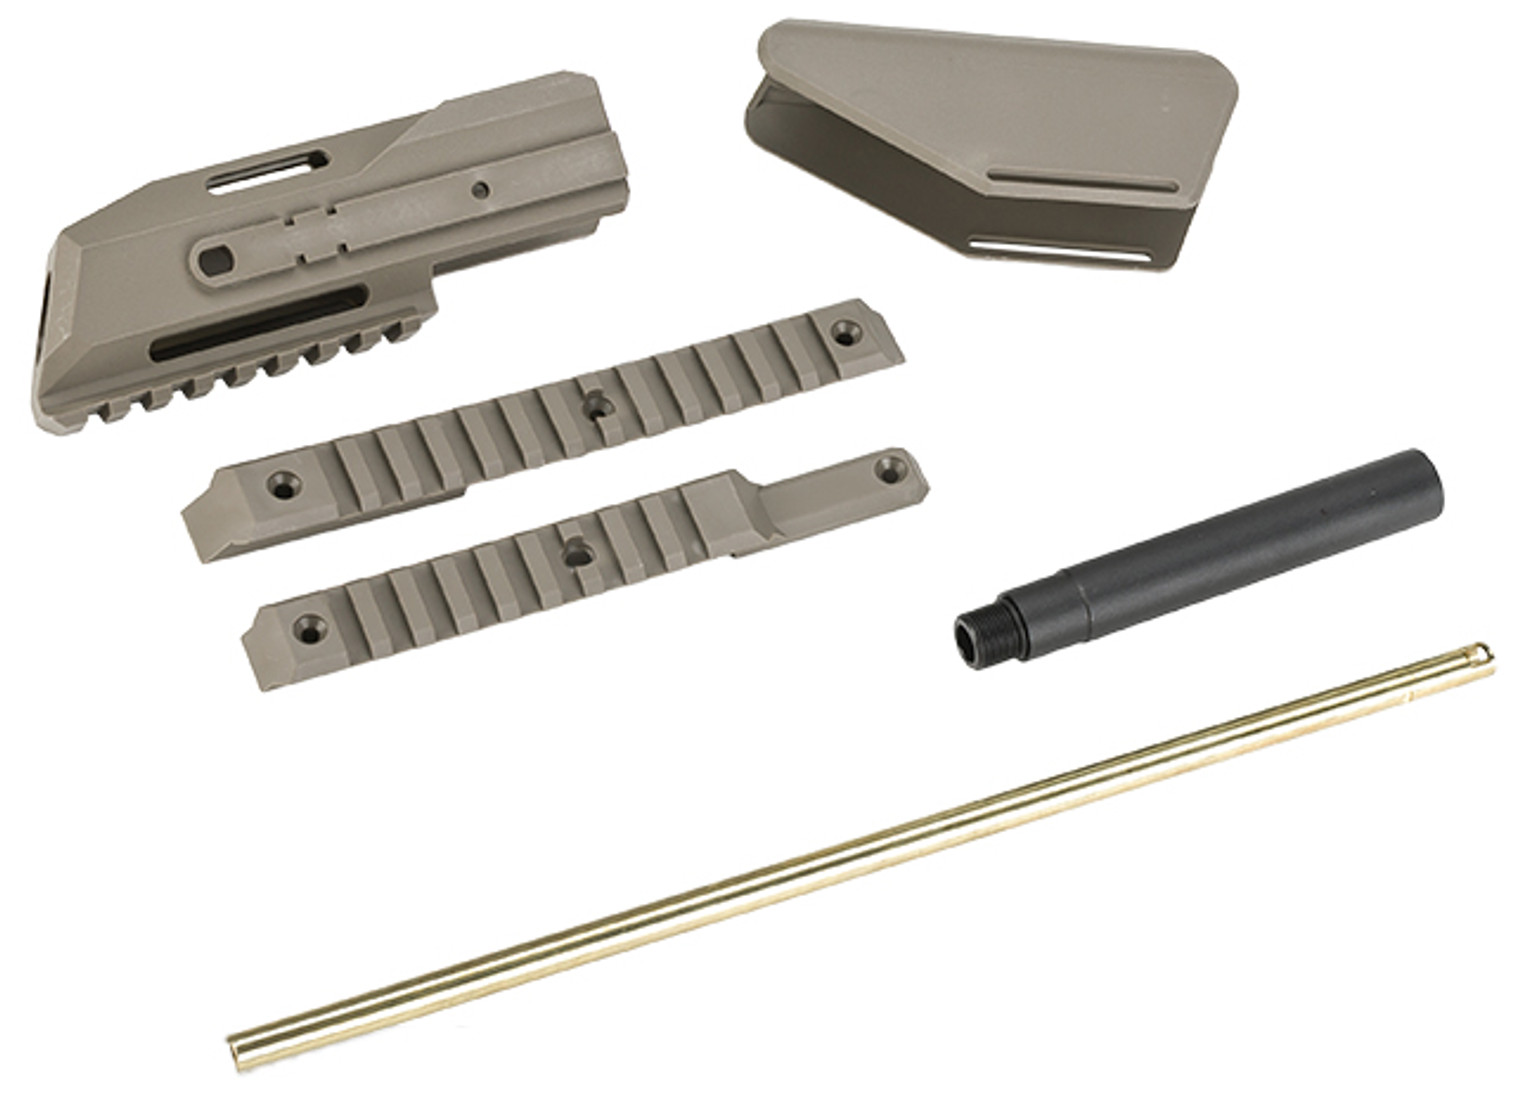 GHK 12" Conversion Kit for G5 Series Airsoft GBB Rifles - Tan